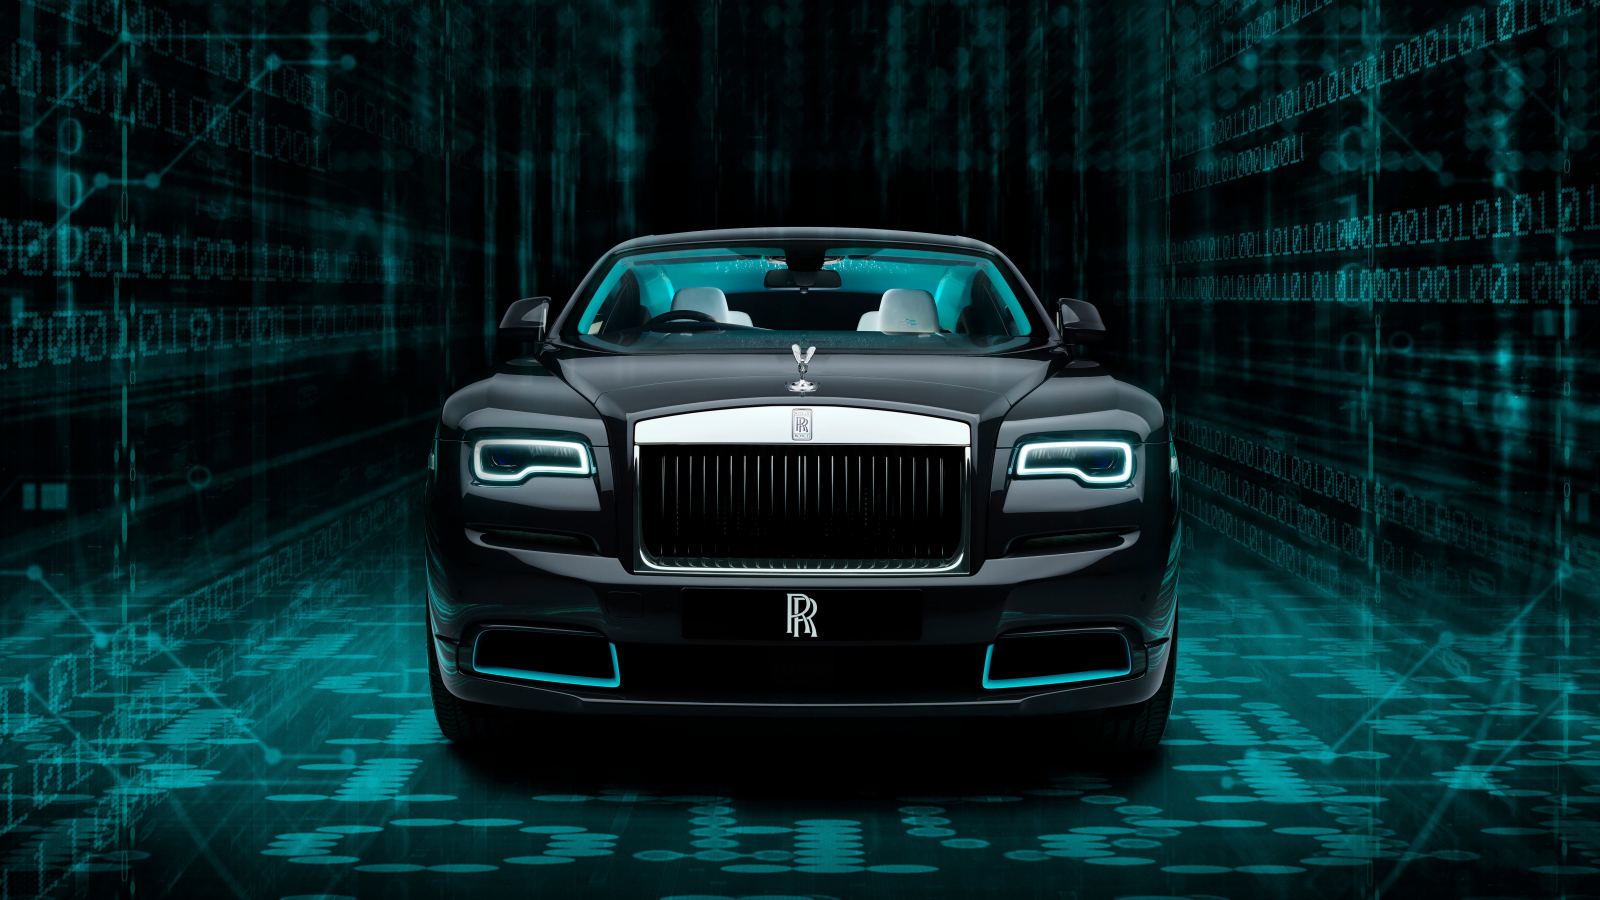 Download wallpaper 1600x900 luxurious, black car, rolls-royce wraith, 2020,  16:9 widescreen 1600x900 hd background, 25380